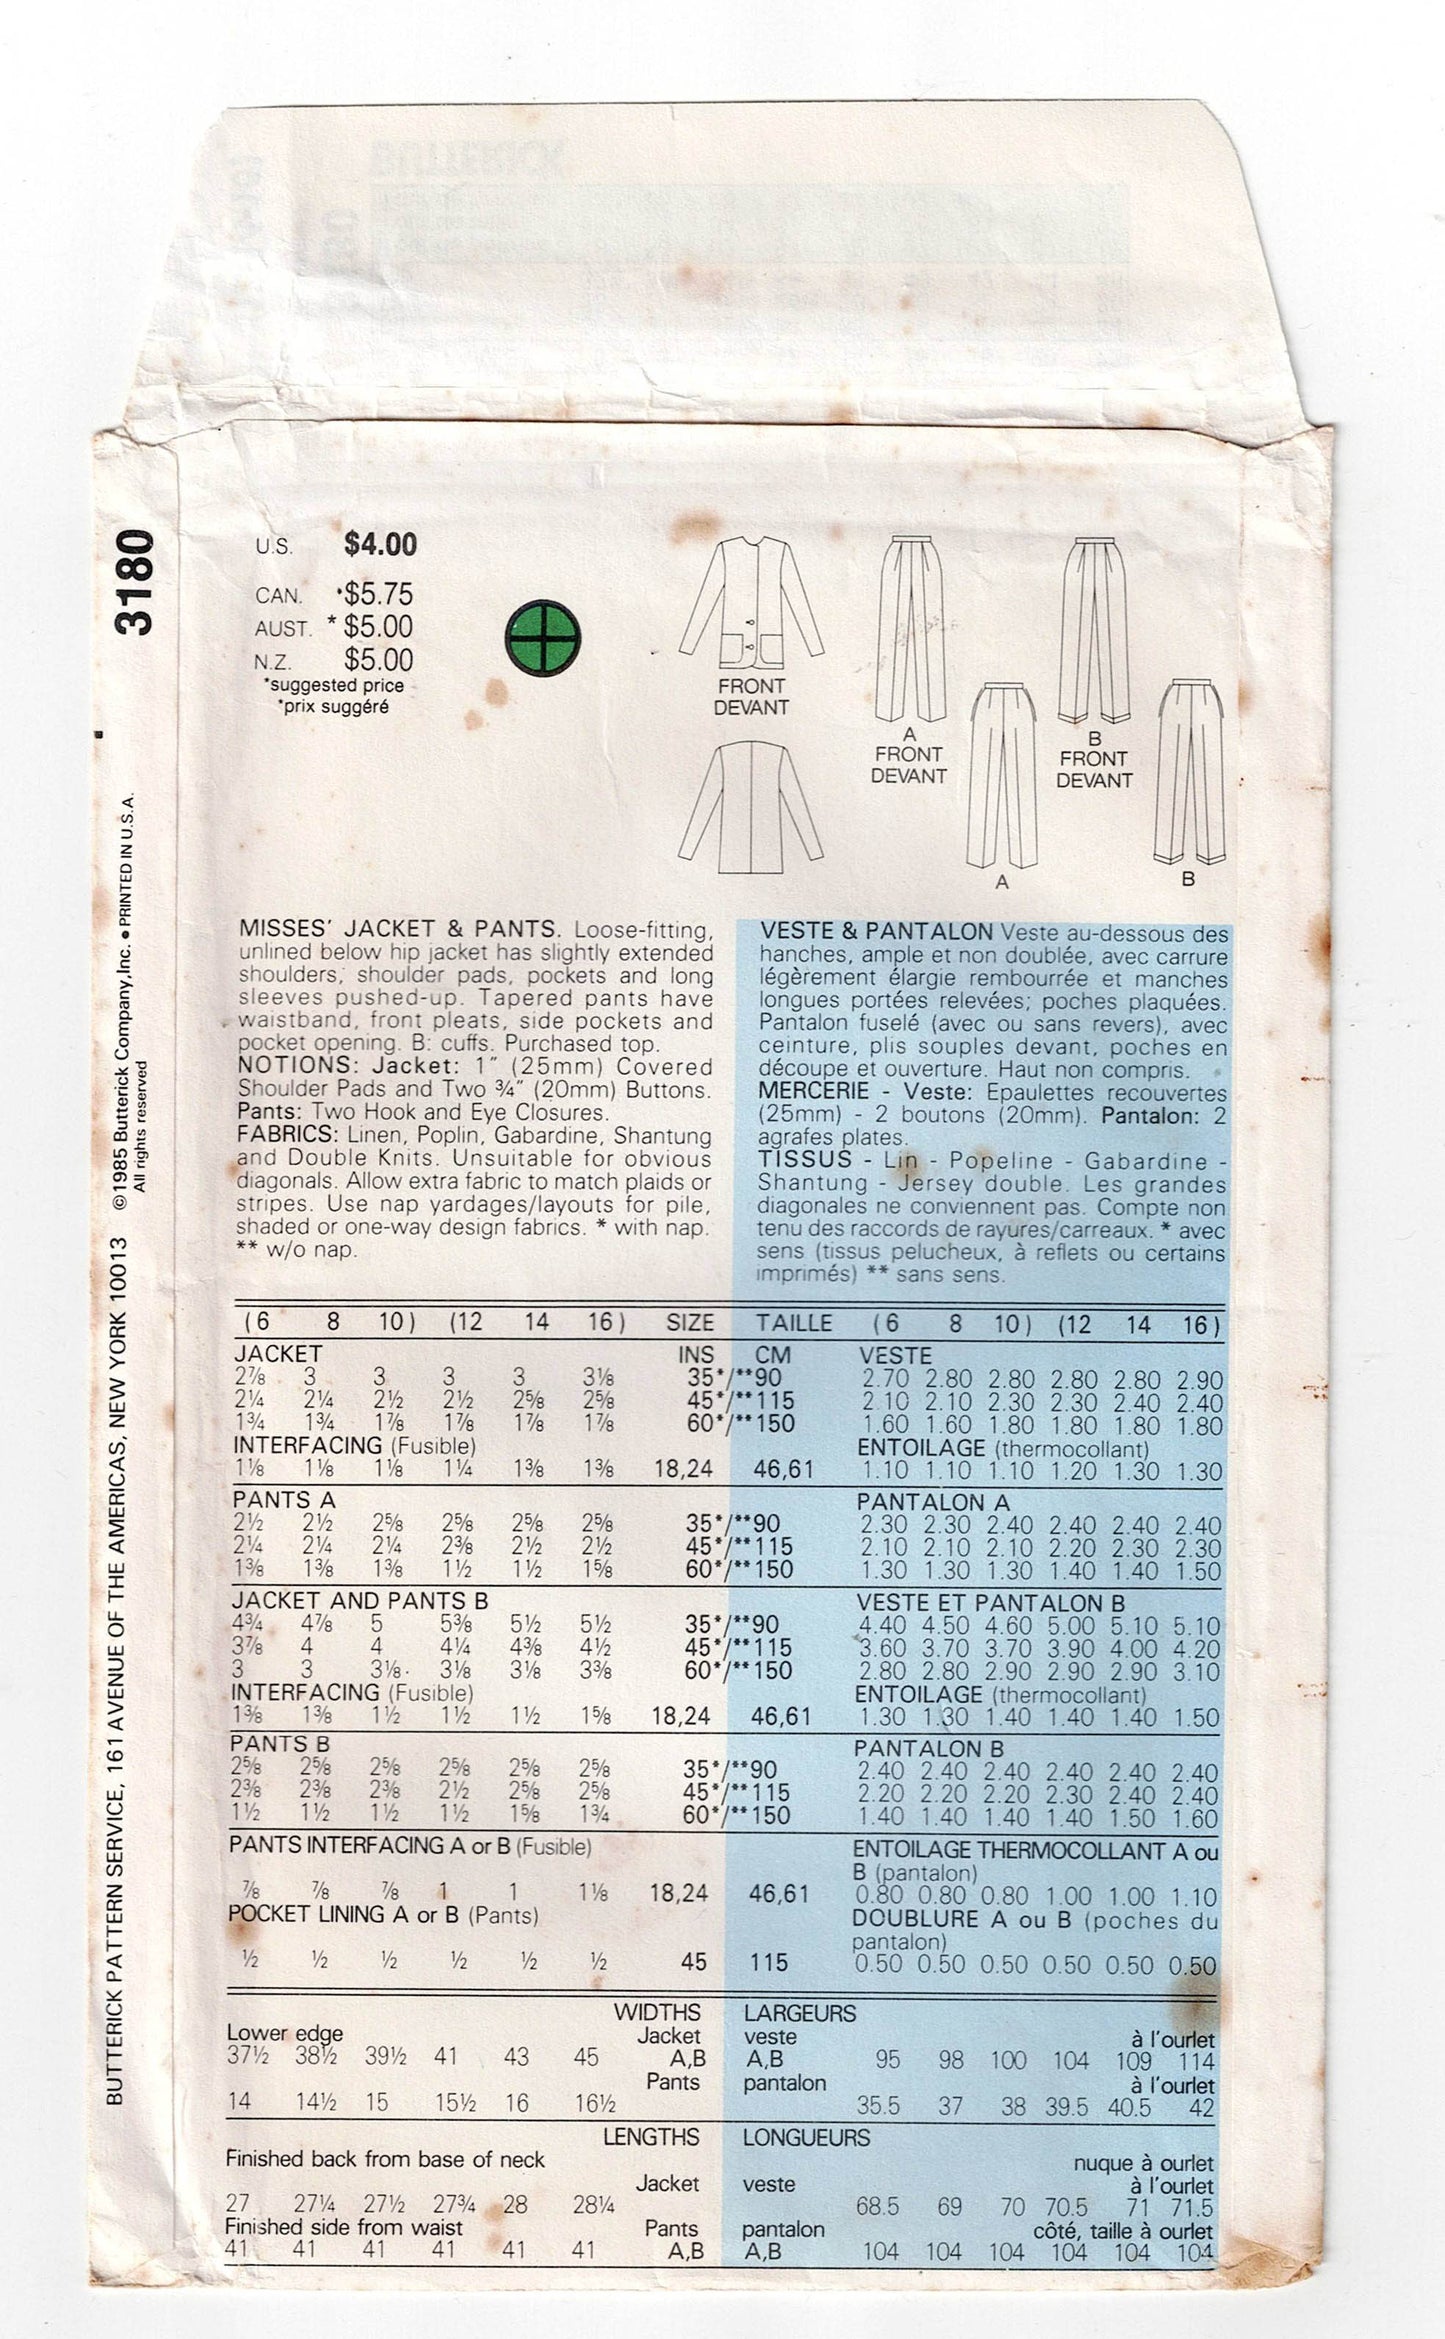 Butterick 3180 Womens Pants Suit 1980s Vintage Sewing Pattern Size 12 - 16 UNCUT Factory Folded